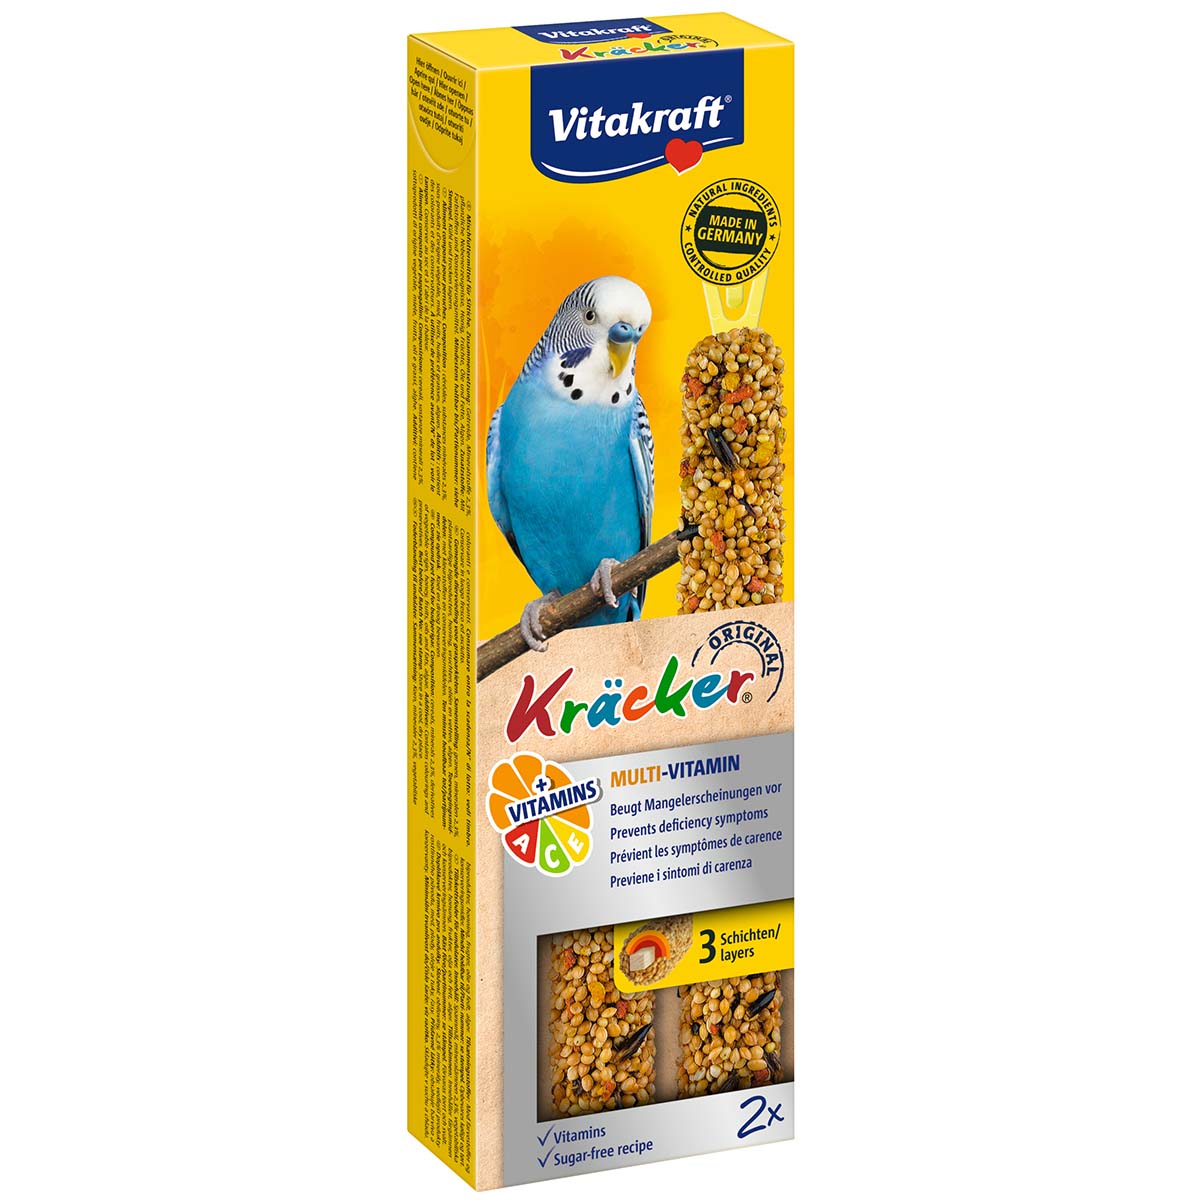 Vitakraft Kräcker® Multi Vitamin 5x2 Stück von Vitakraft